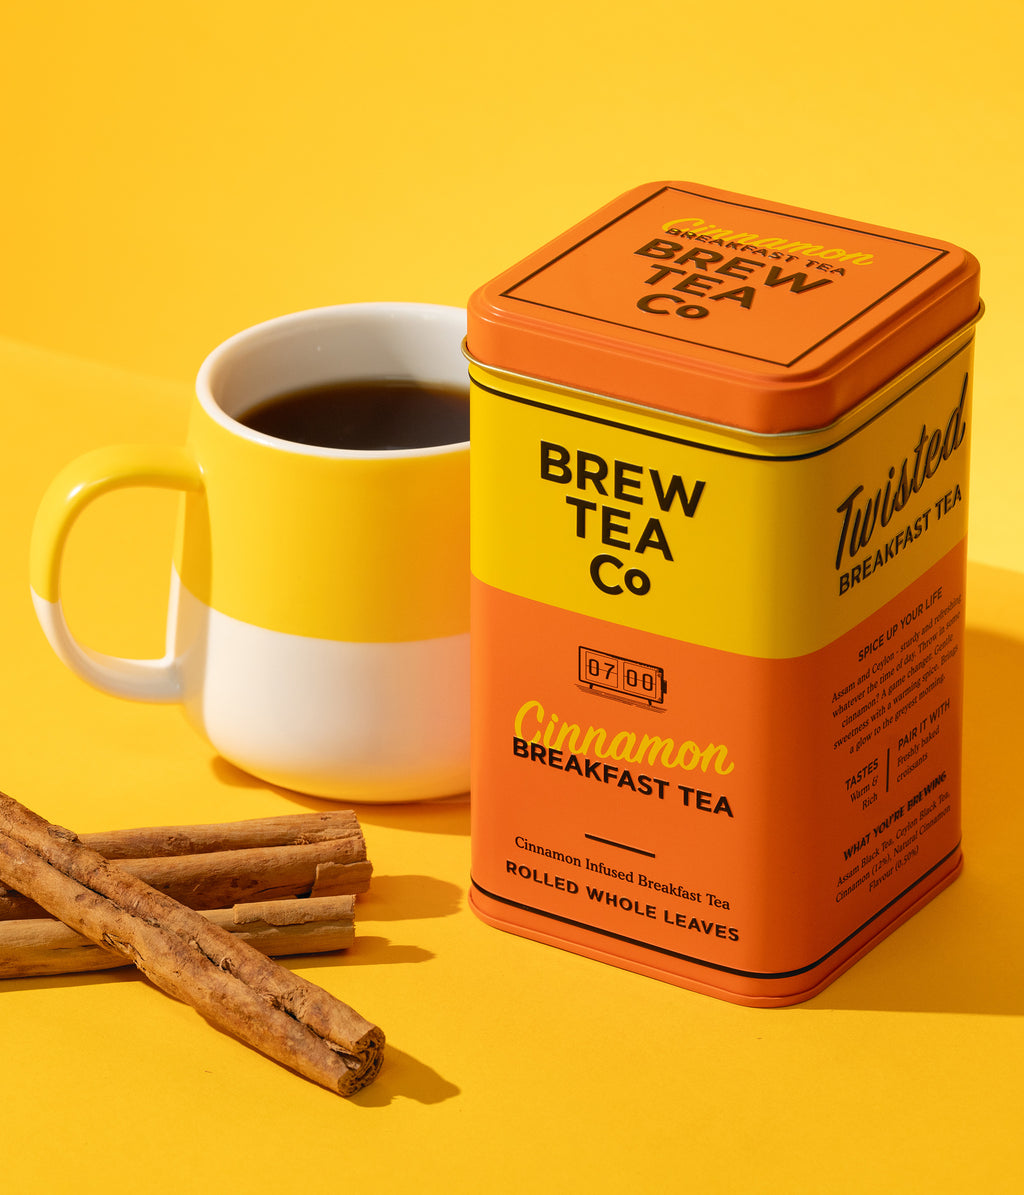 Cinnamon Breakfast Tea - Proper Tea Bags